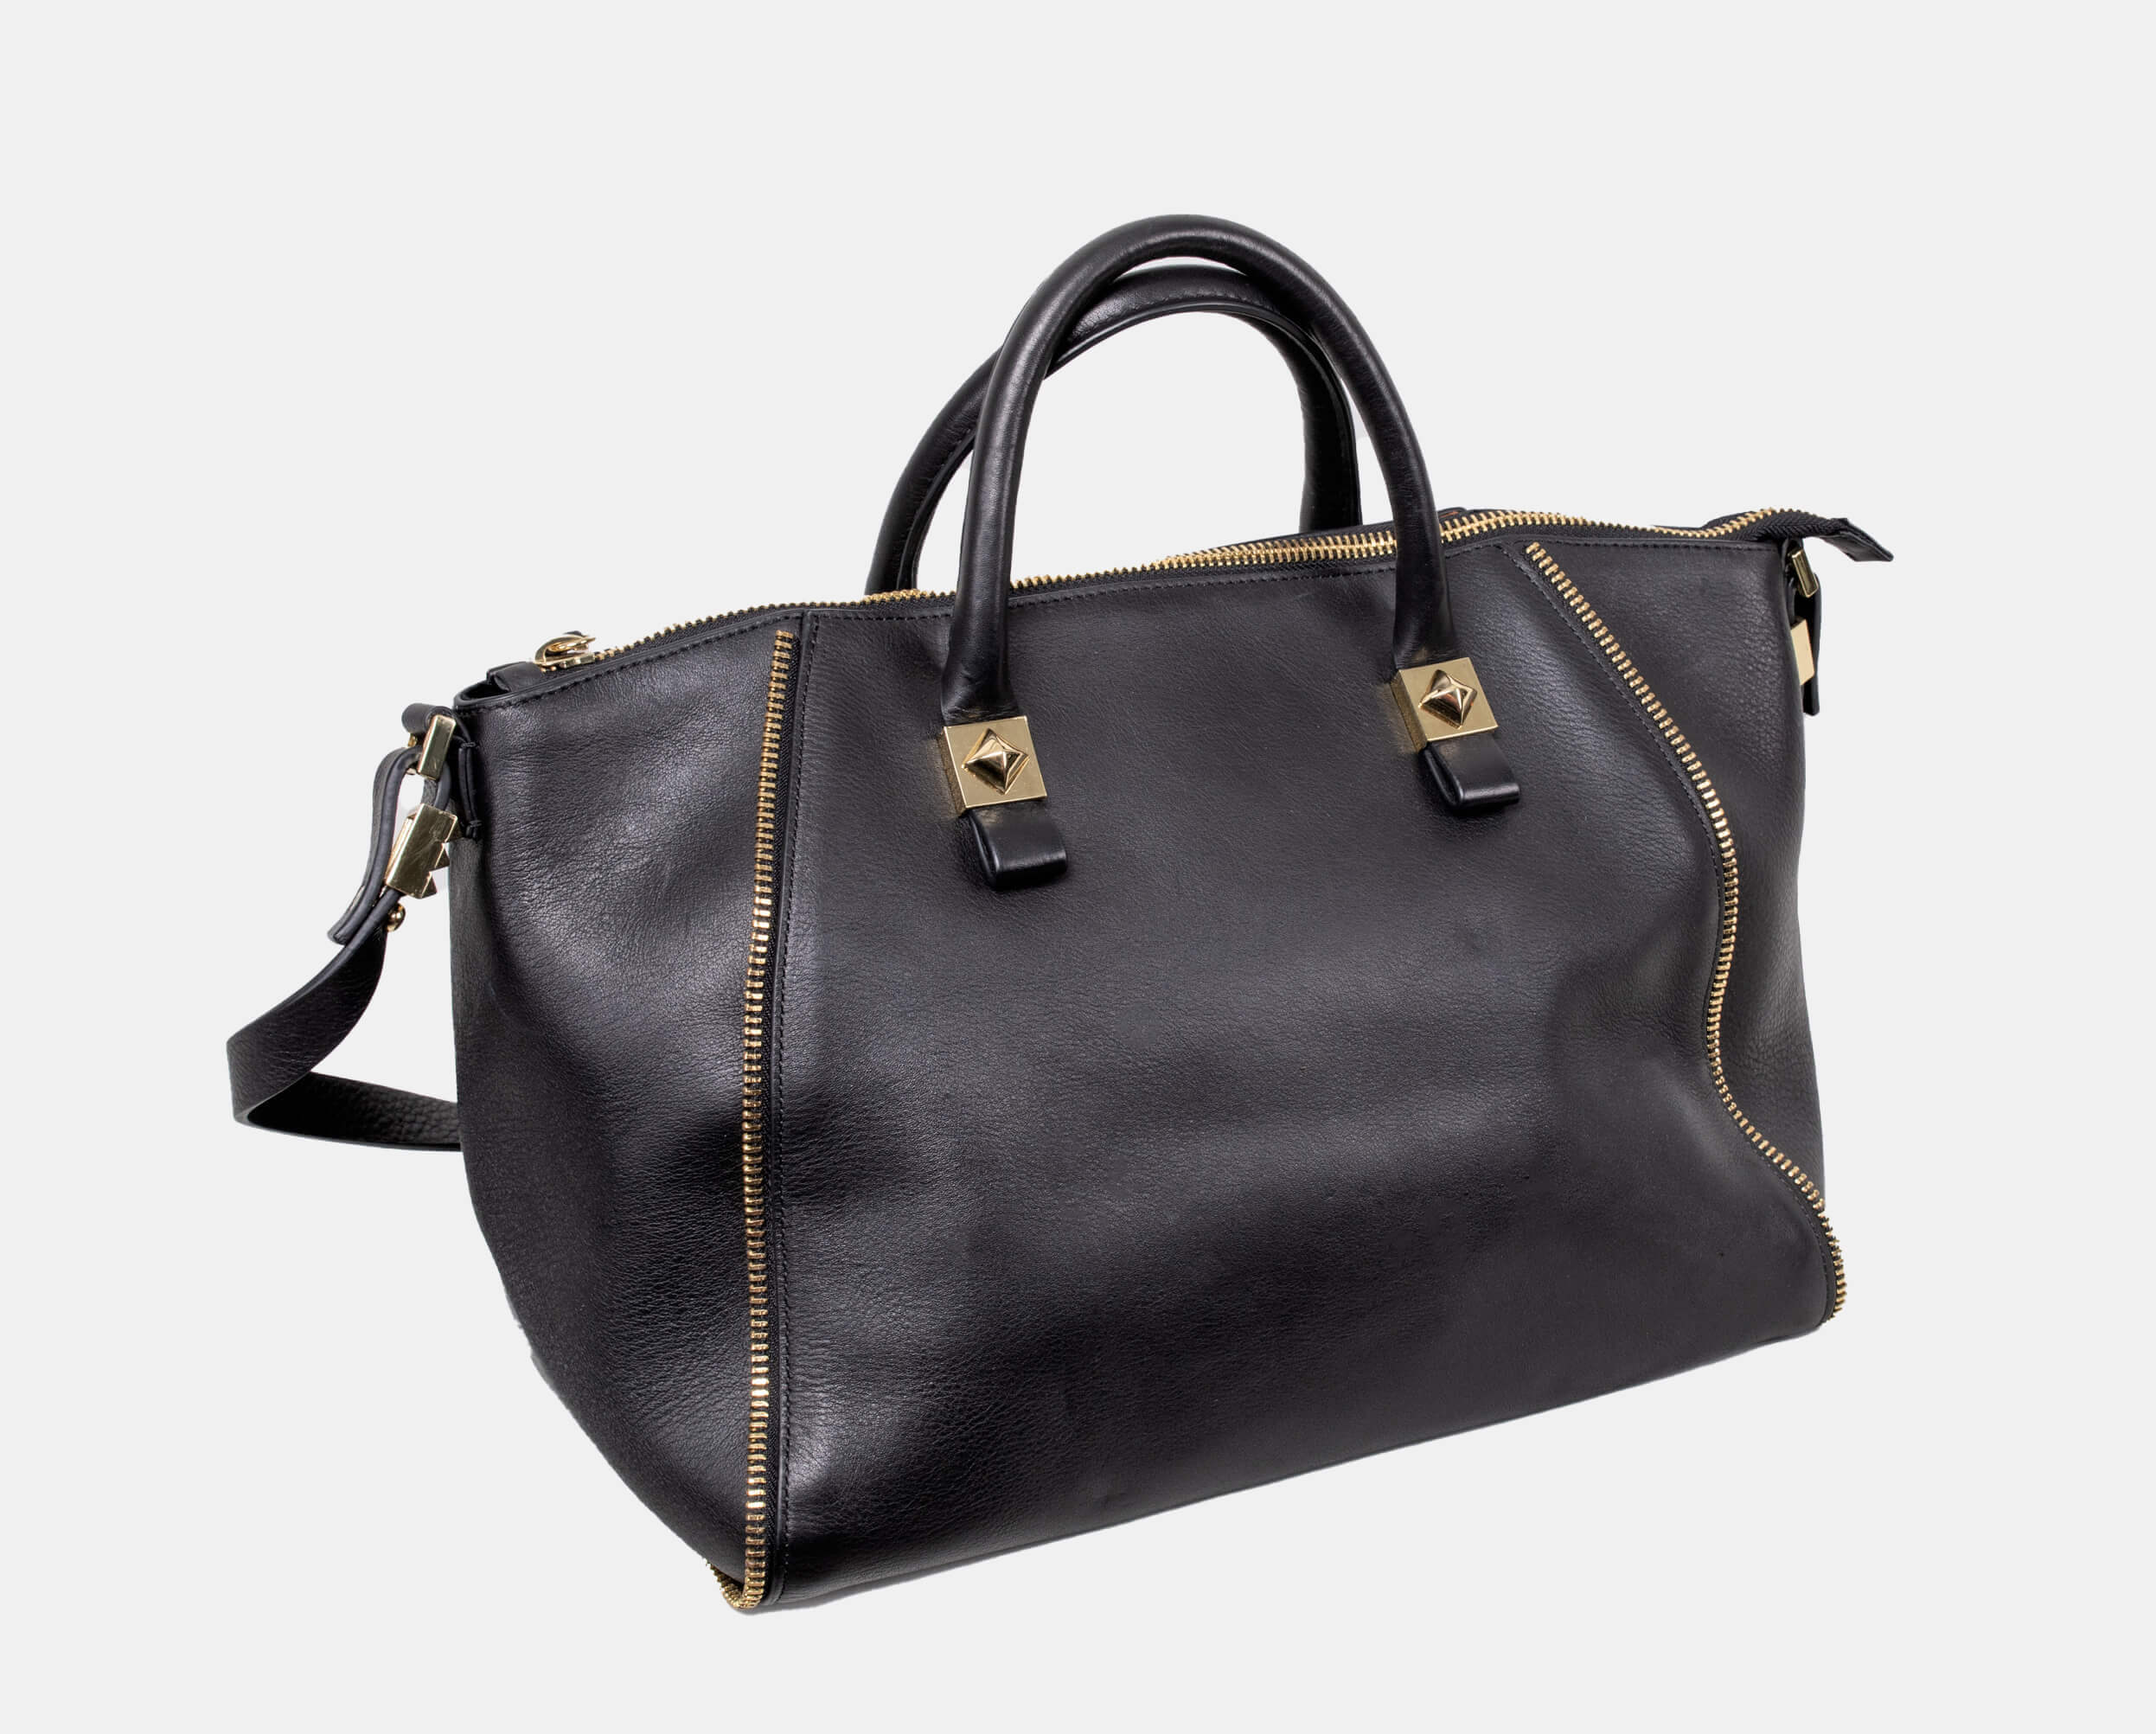 *The Zara handbag cum sling bag